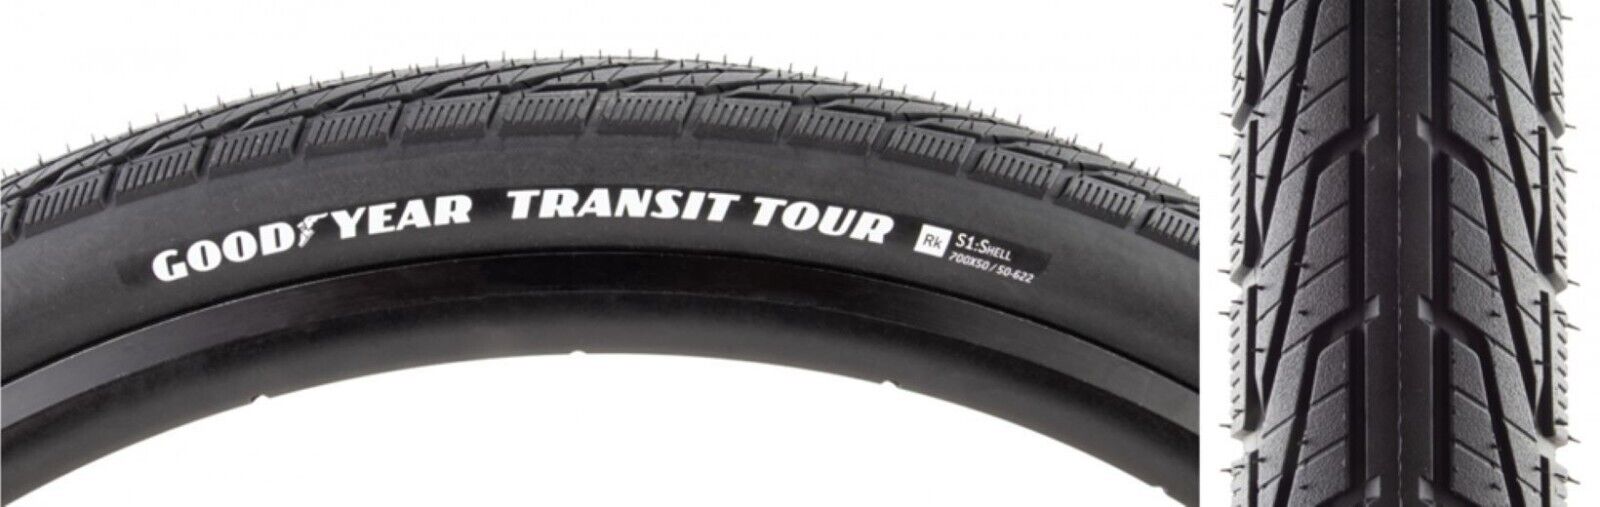 650B GoodYear Transit Tour TT S1:Shell Tyre 27.5 x 2.00 Gravel Bike MTB 50 - 584